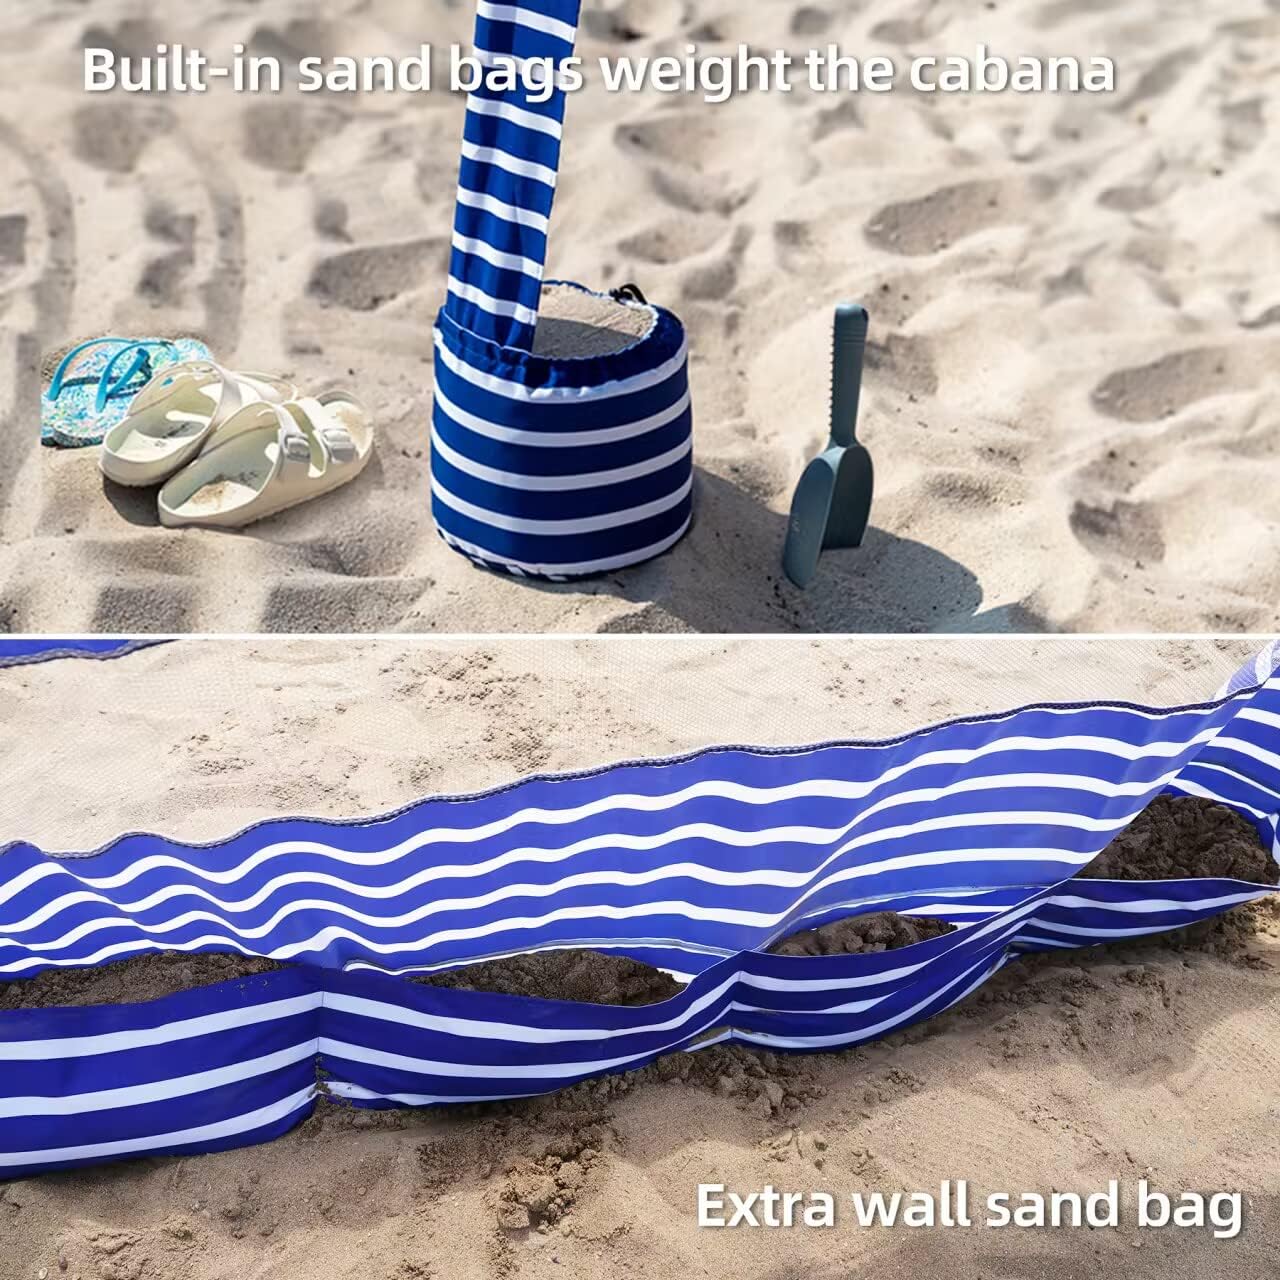 AMMSUN 6.2'×6.2' Beach Cabana With Privacy Sunwall Siesta Stripe